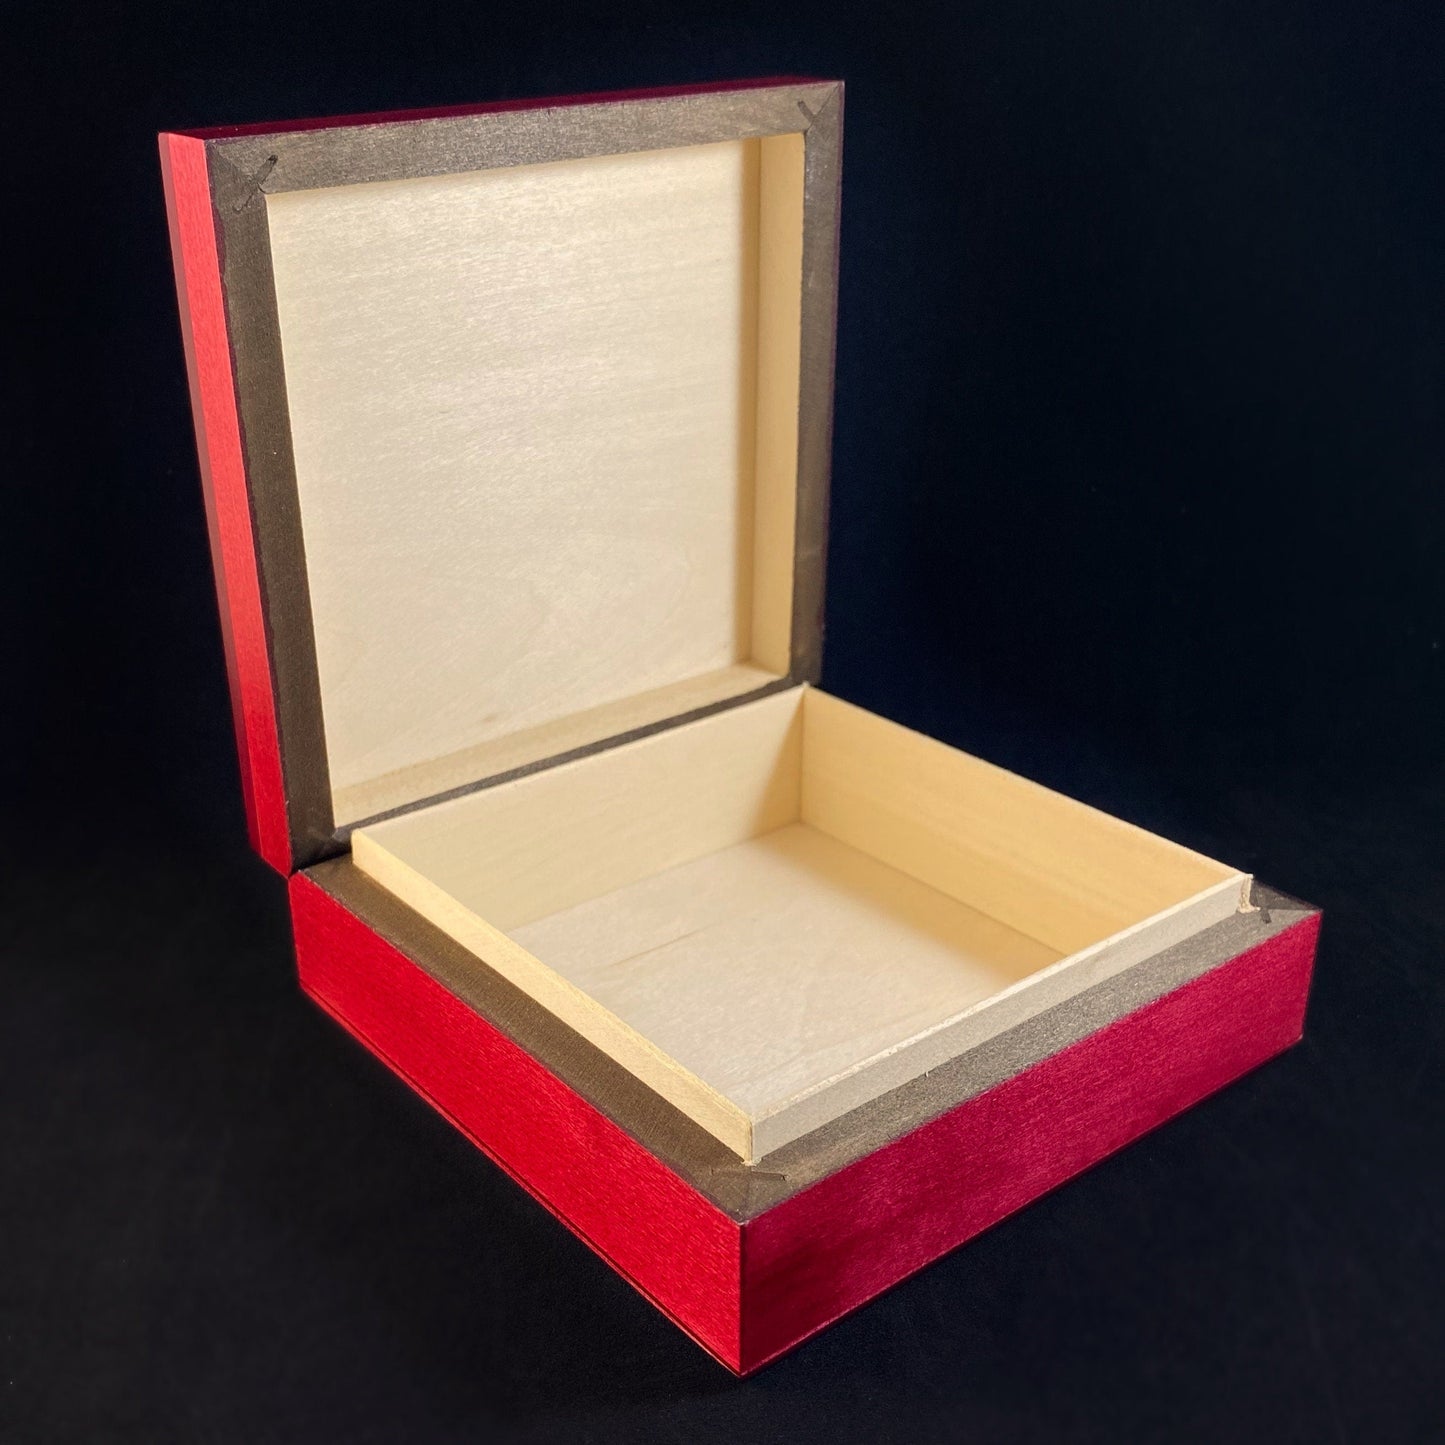 Bird, Flowers, and Heart Handmade Hinged Square Red Wooden Treasure Box